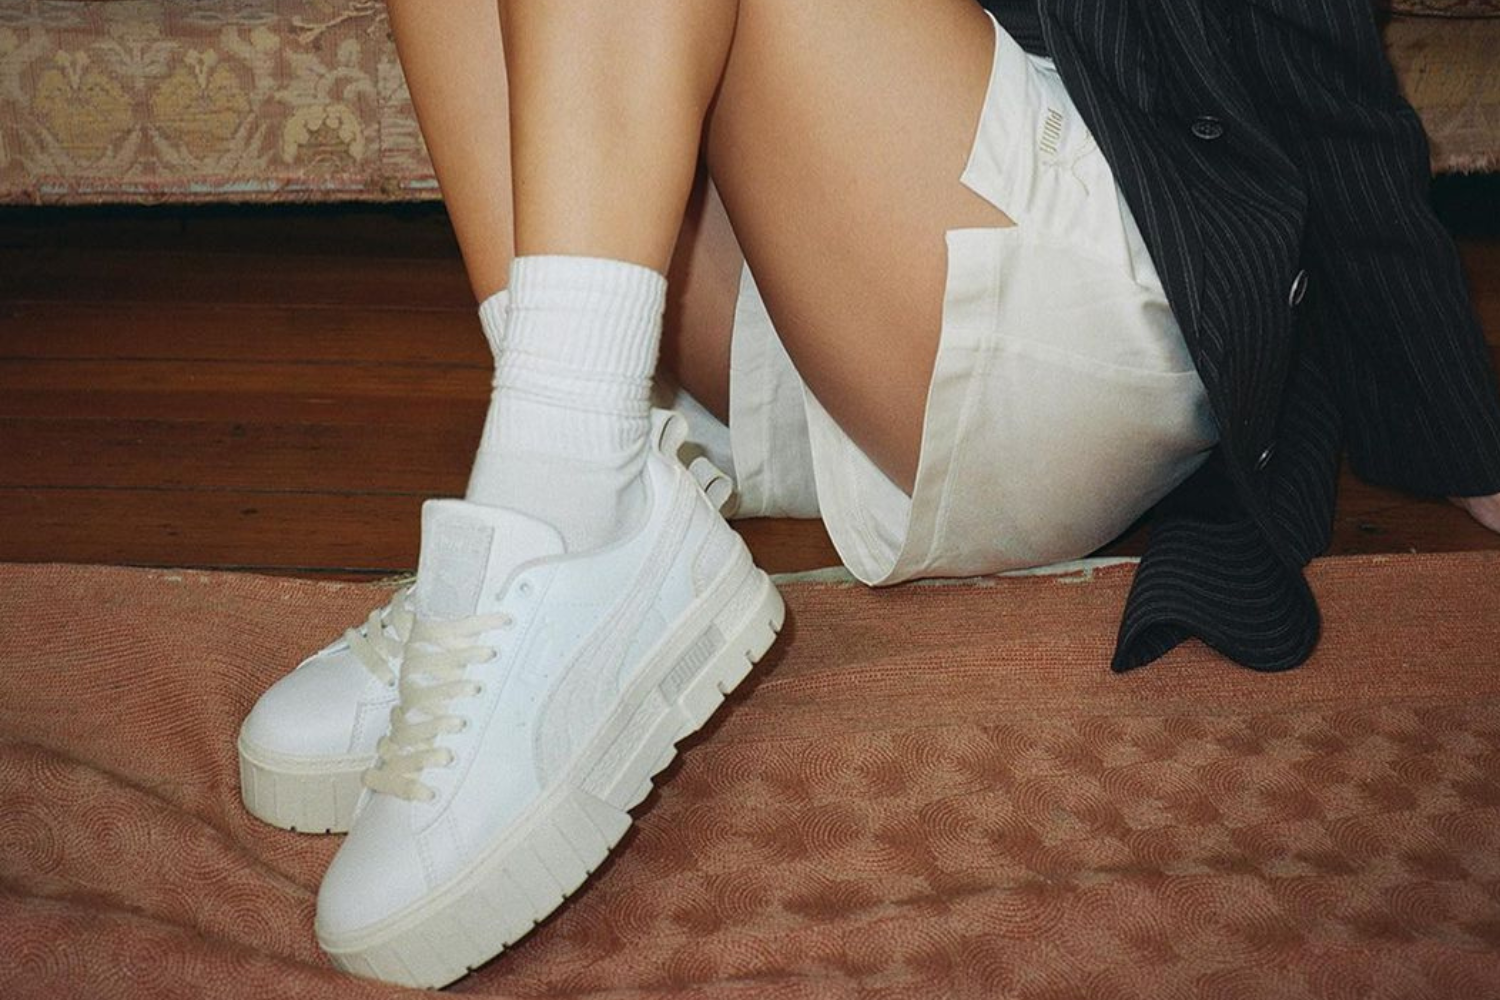 Ananiver stam Flash De populairste witte sneakers bij PUMA - Sneakerjagers